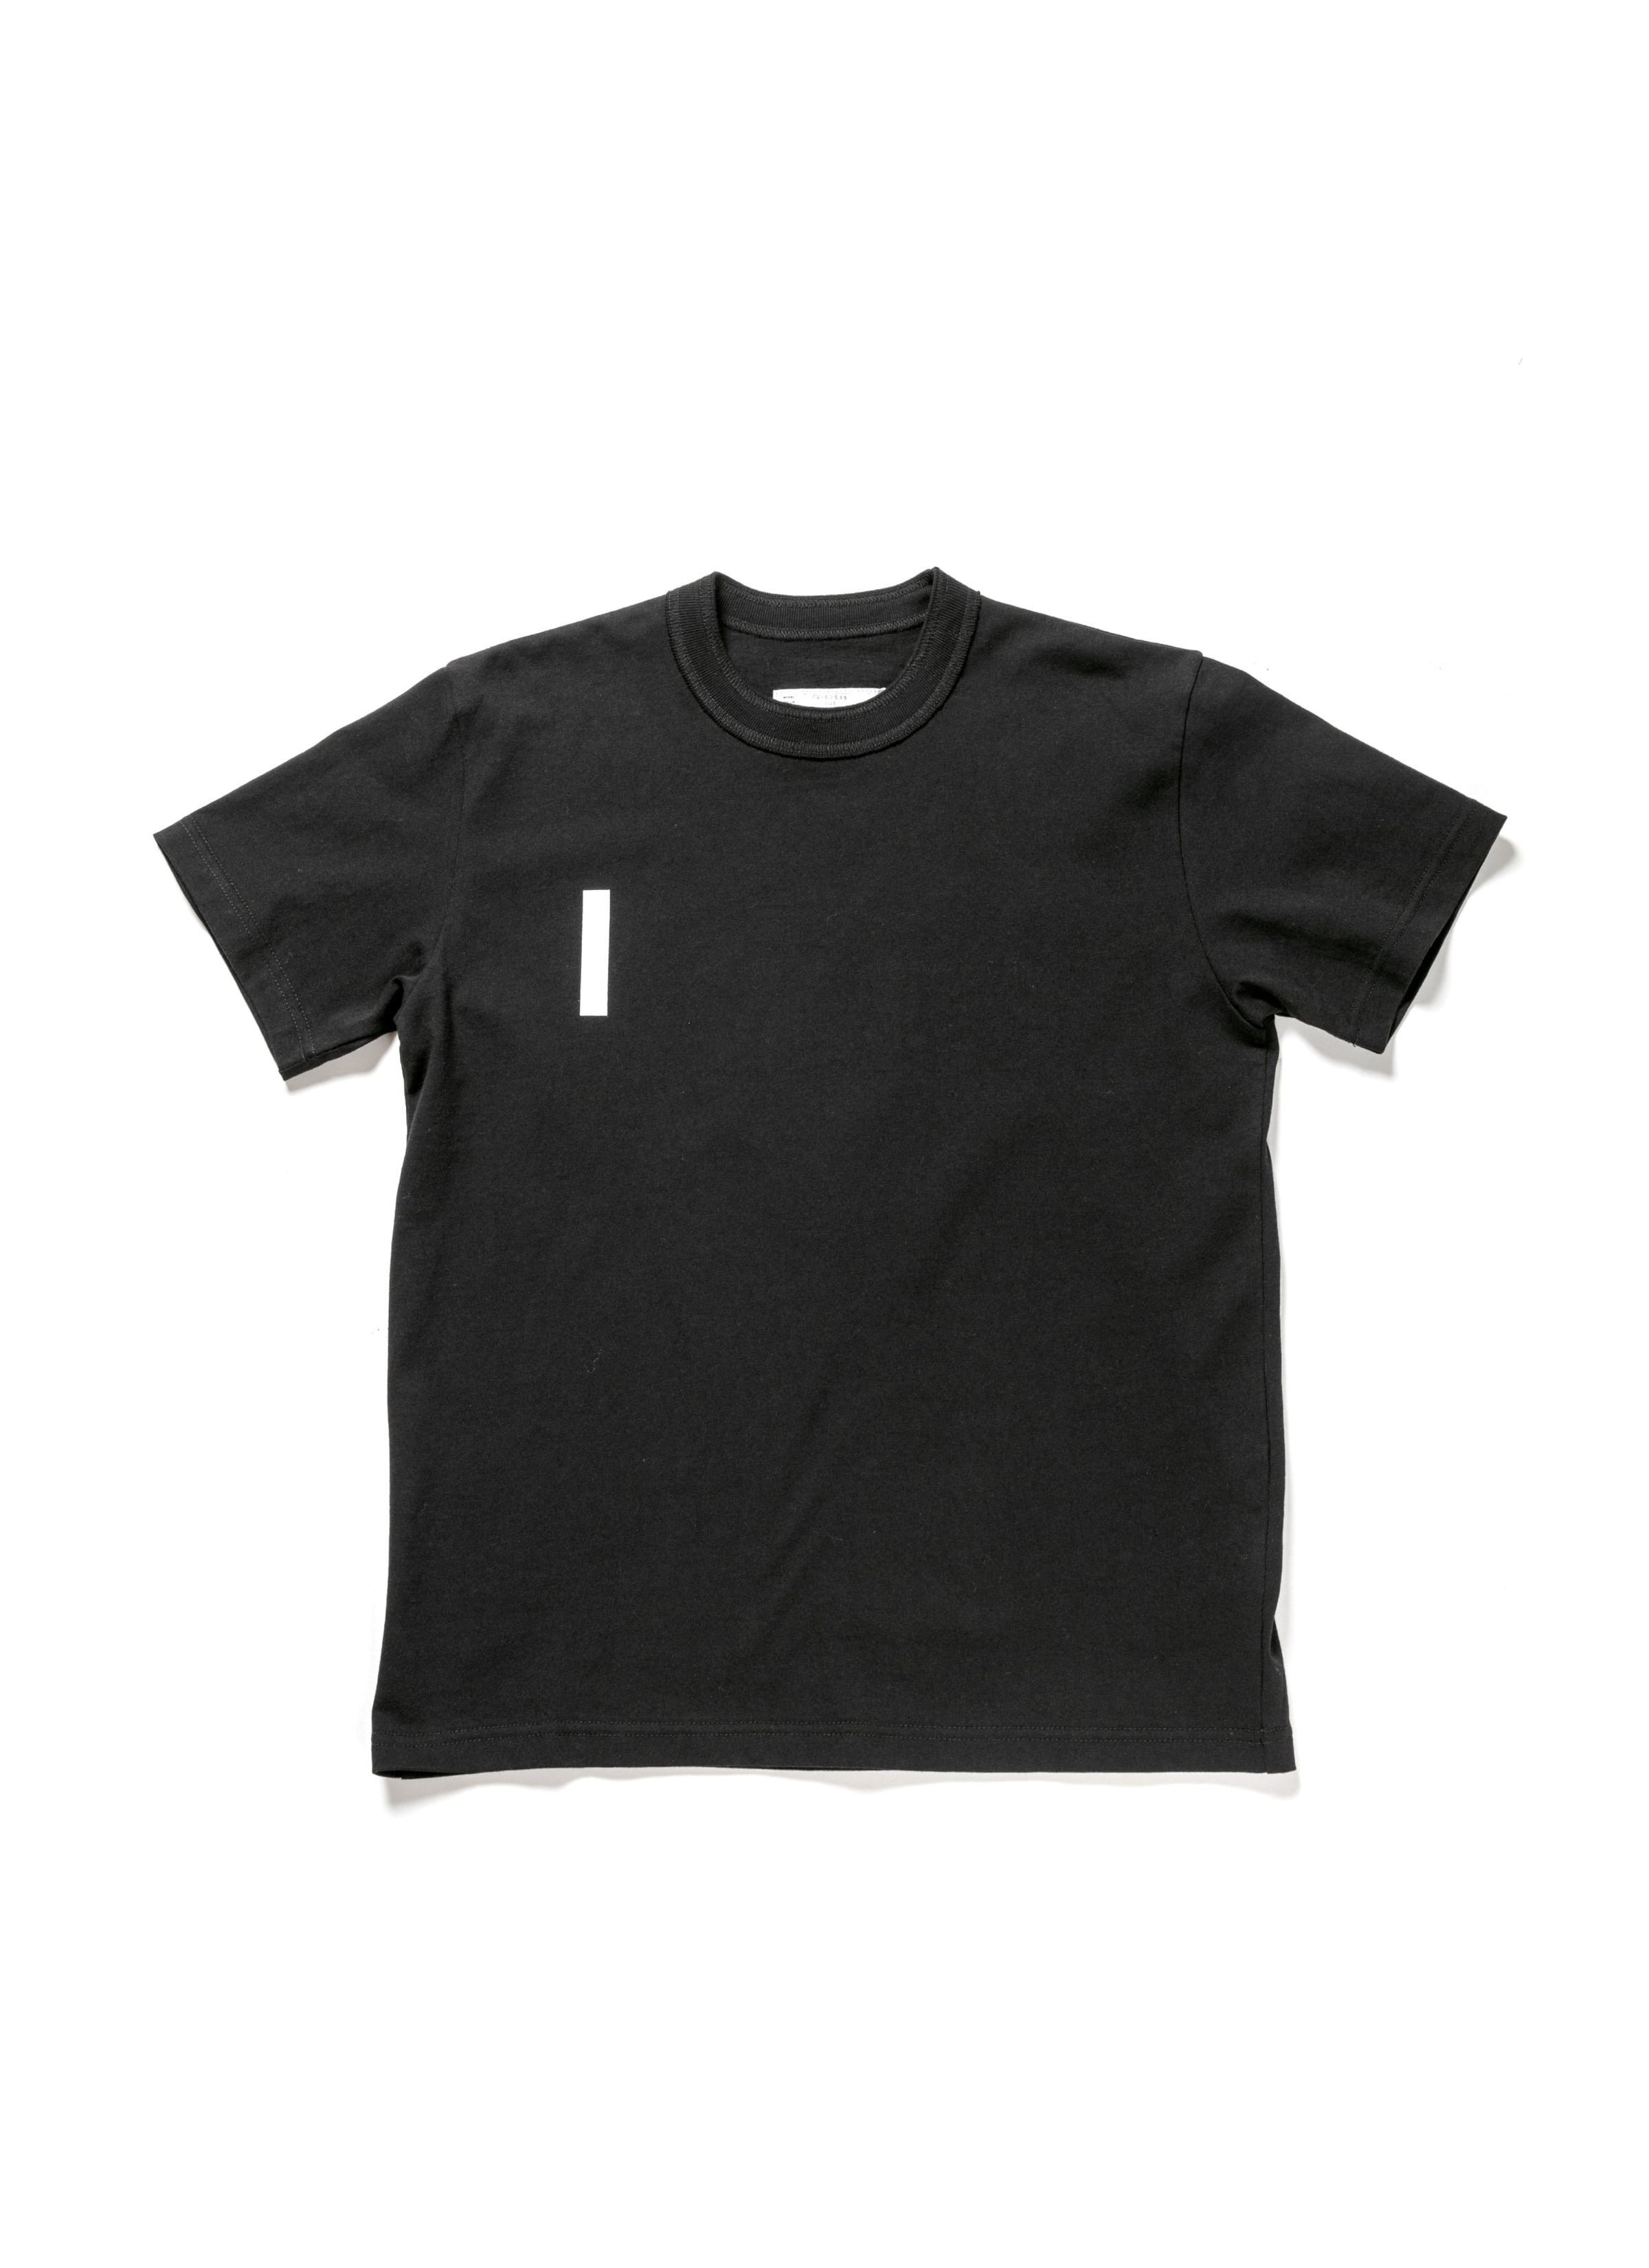 I Get LIFTED T-Shirt 詳細画像 BLACK 1